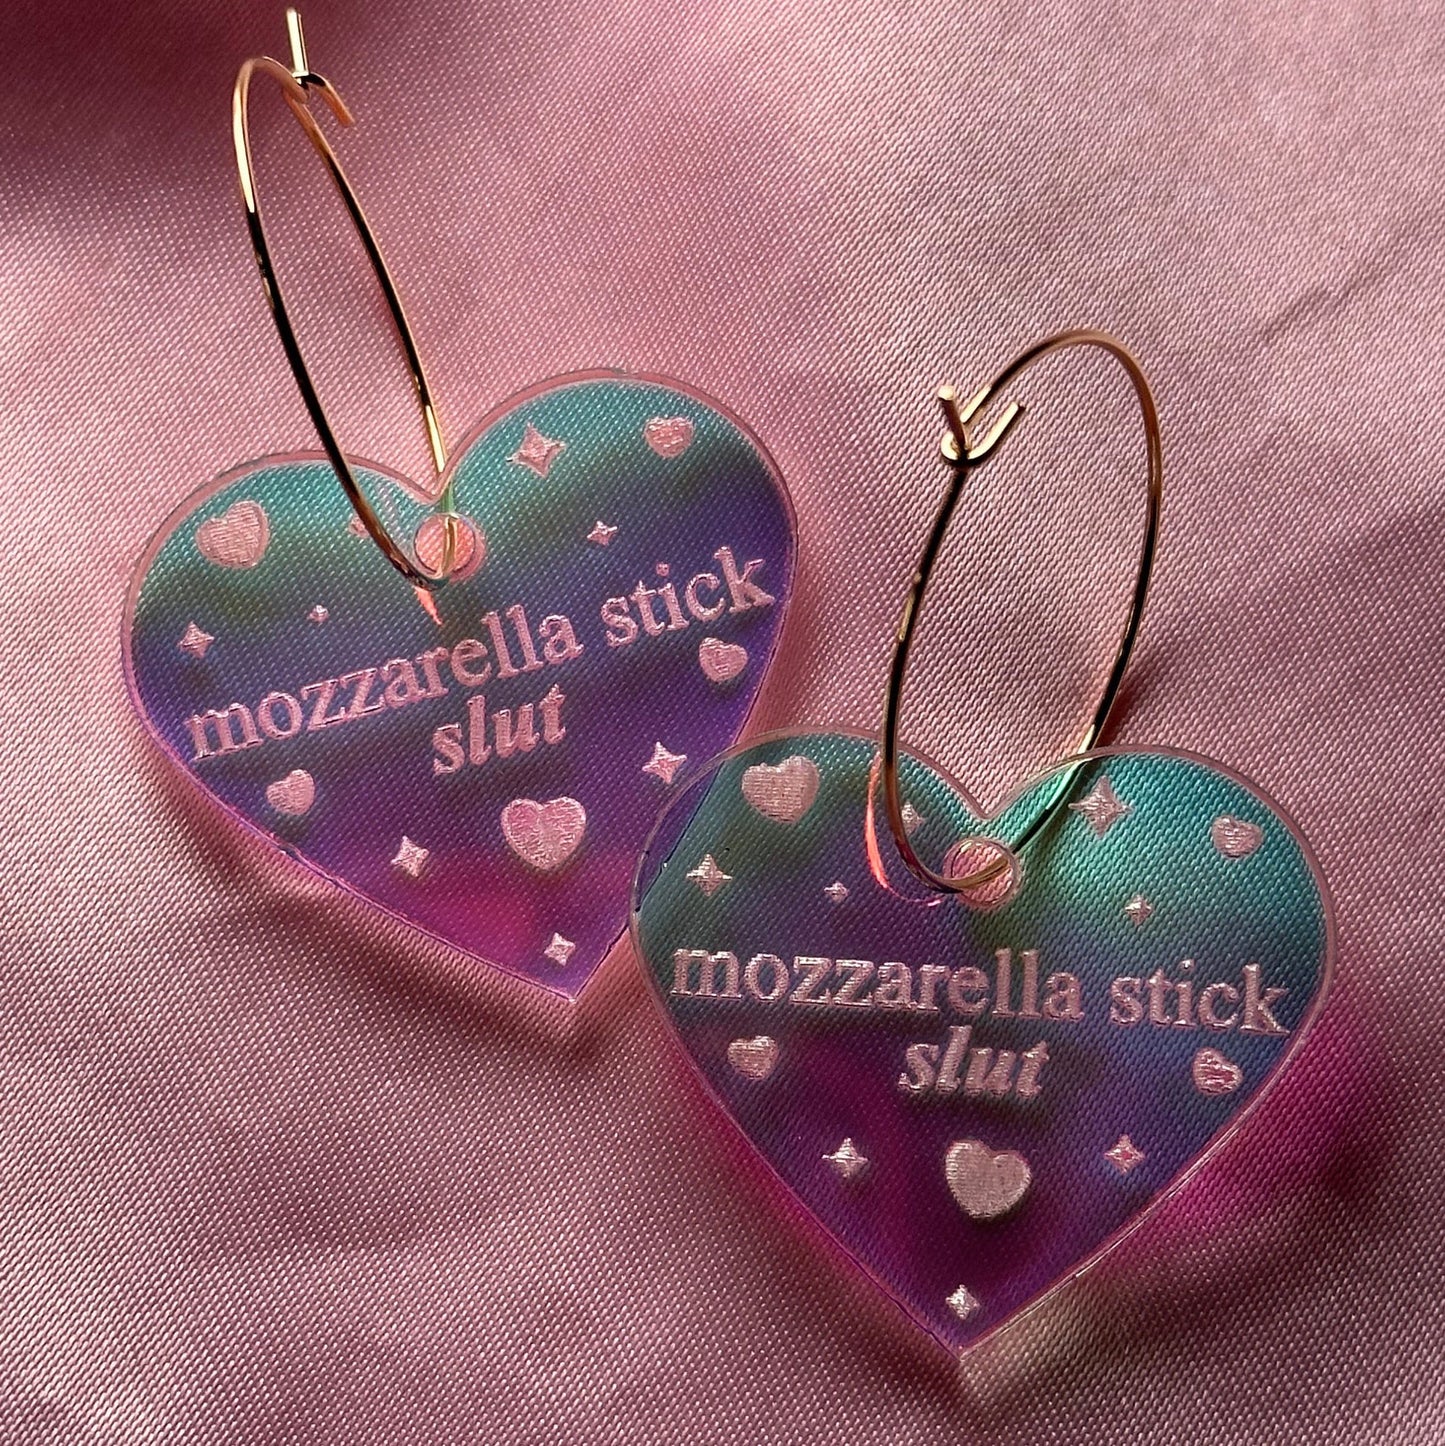 Iridescent Mozzarella Stick Slut Heart Hoop Earrings